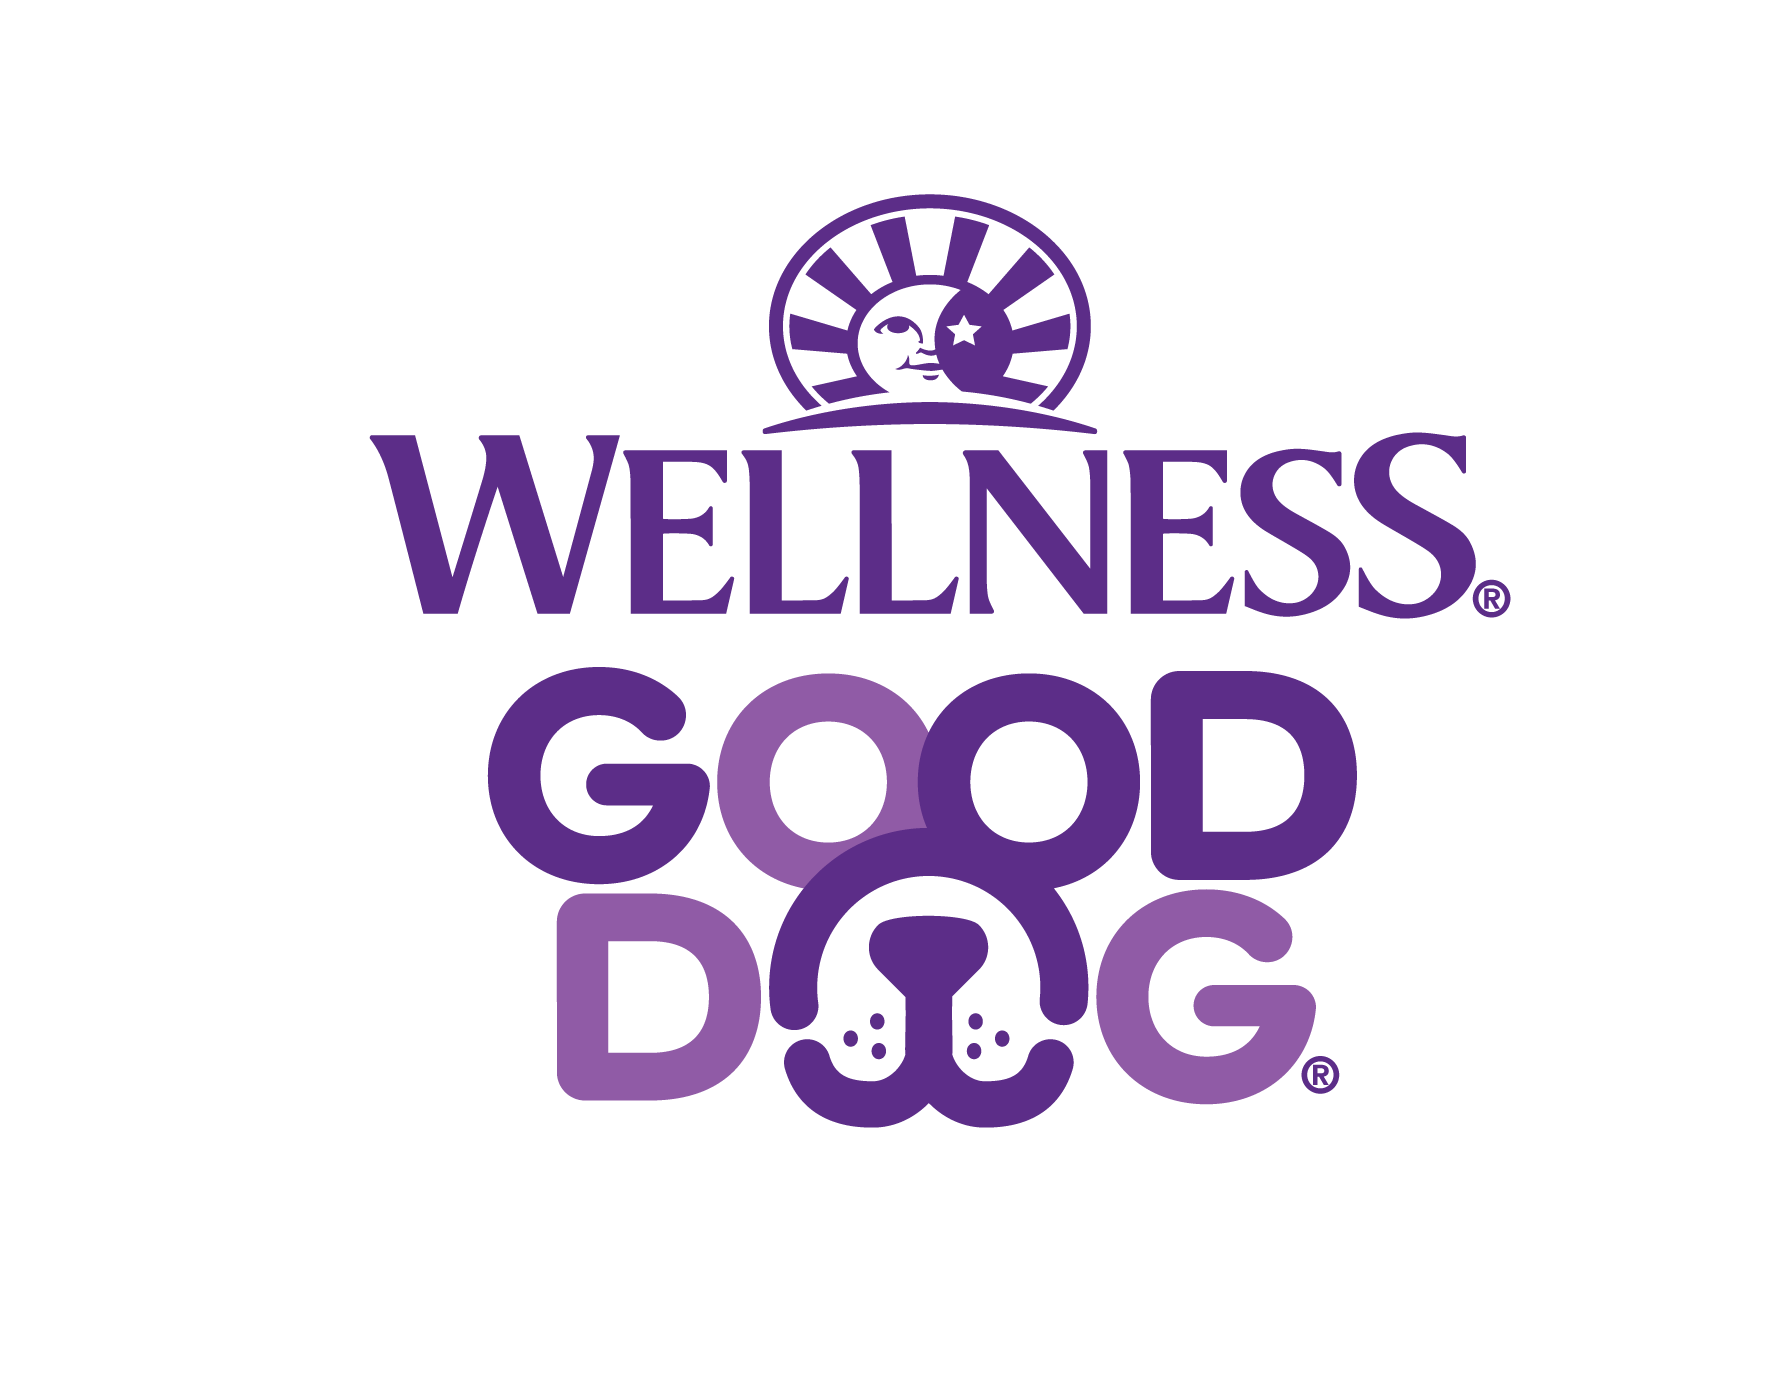 Good dog logo